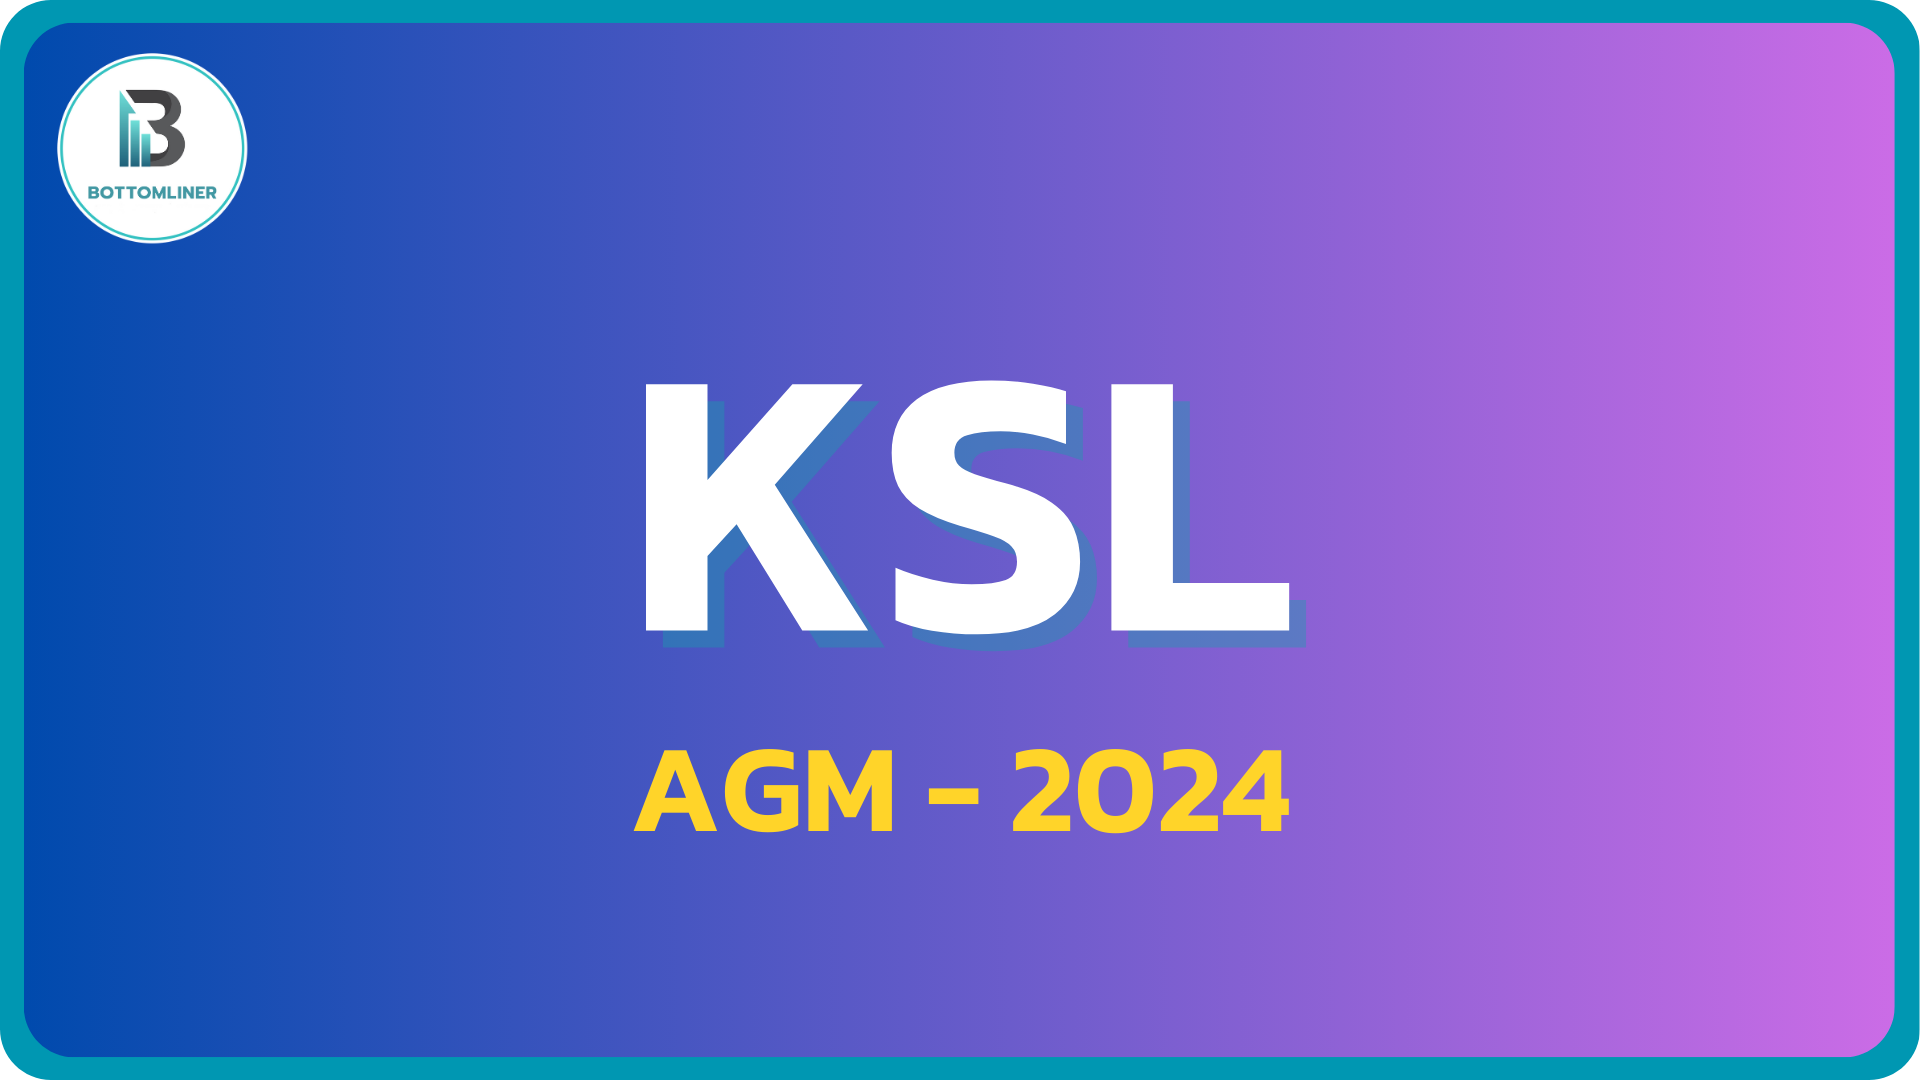 KSL สรุปประชุม AGM ปี 2024